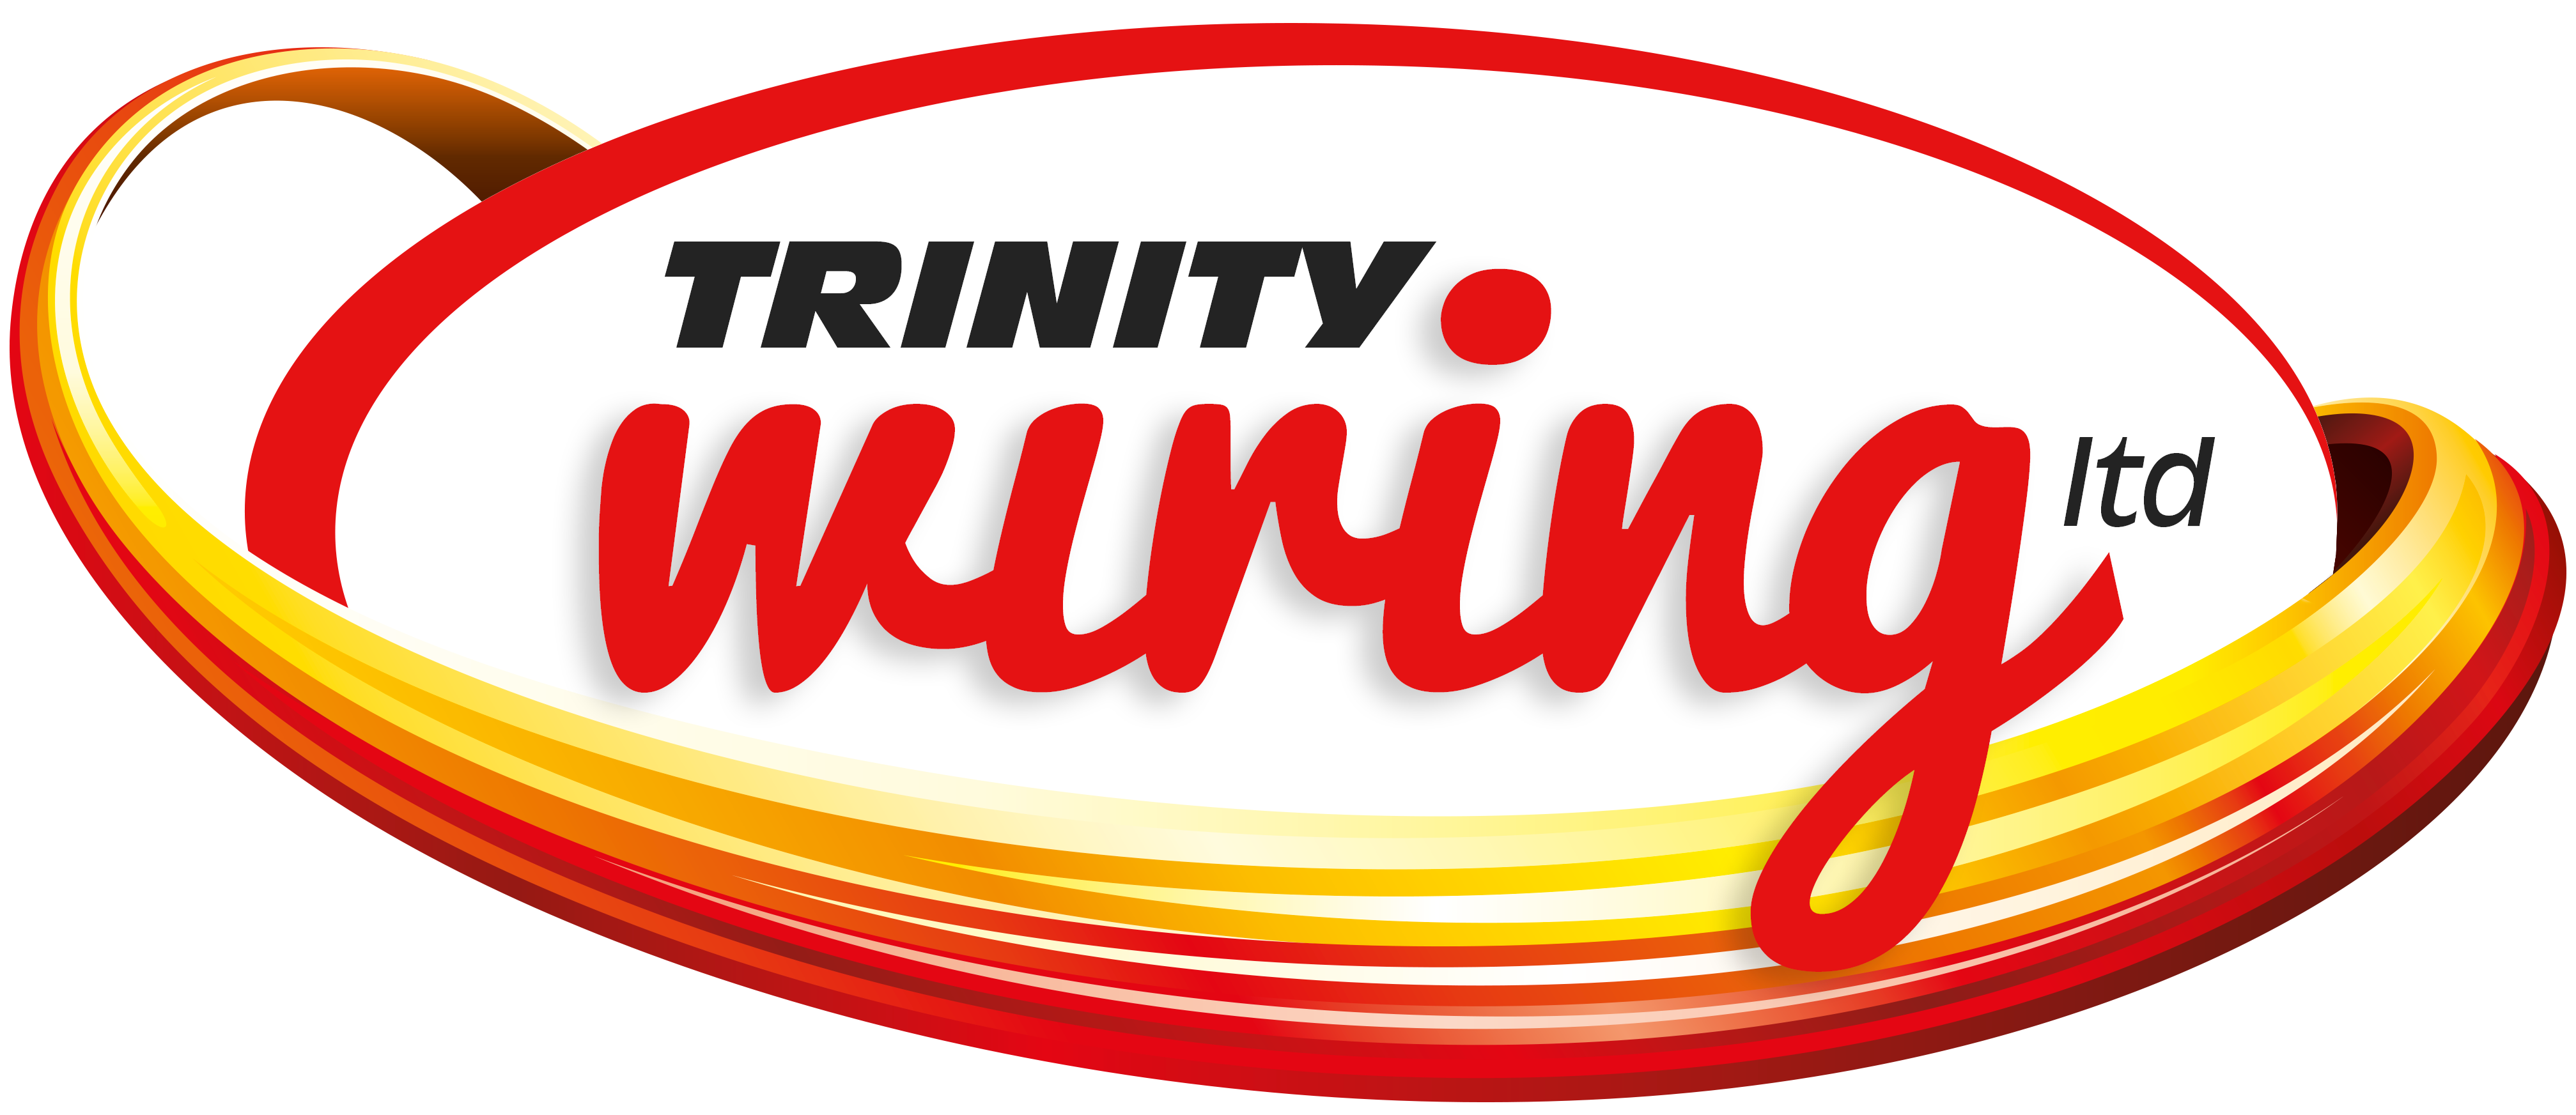 Trinity Wiring Ltd